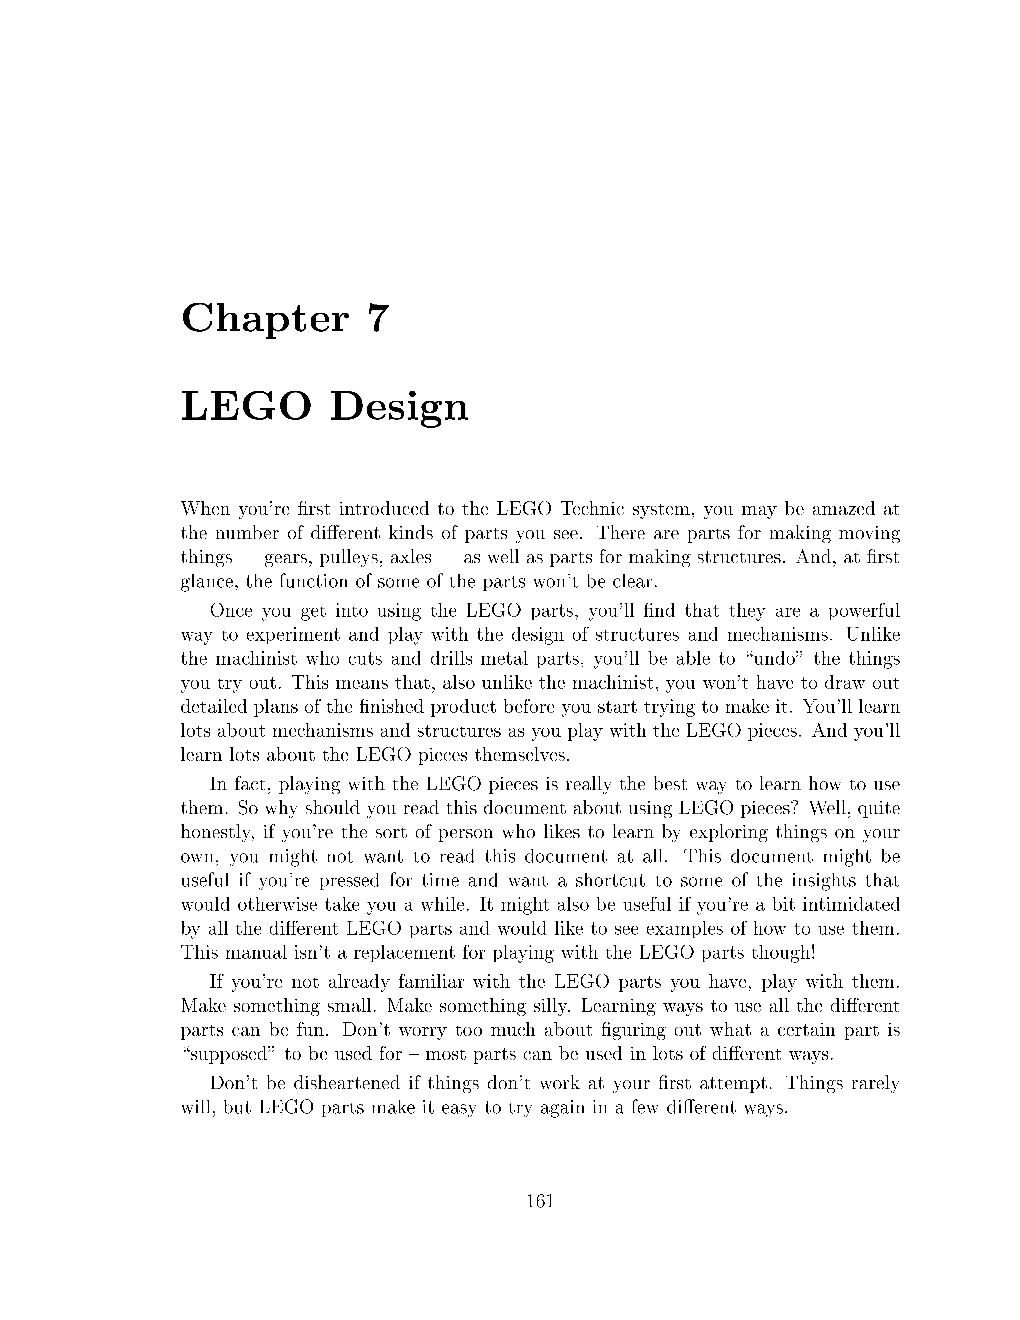 Chapter 7 LEGO Design